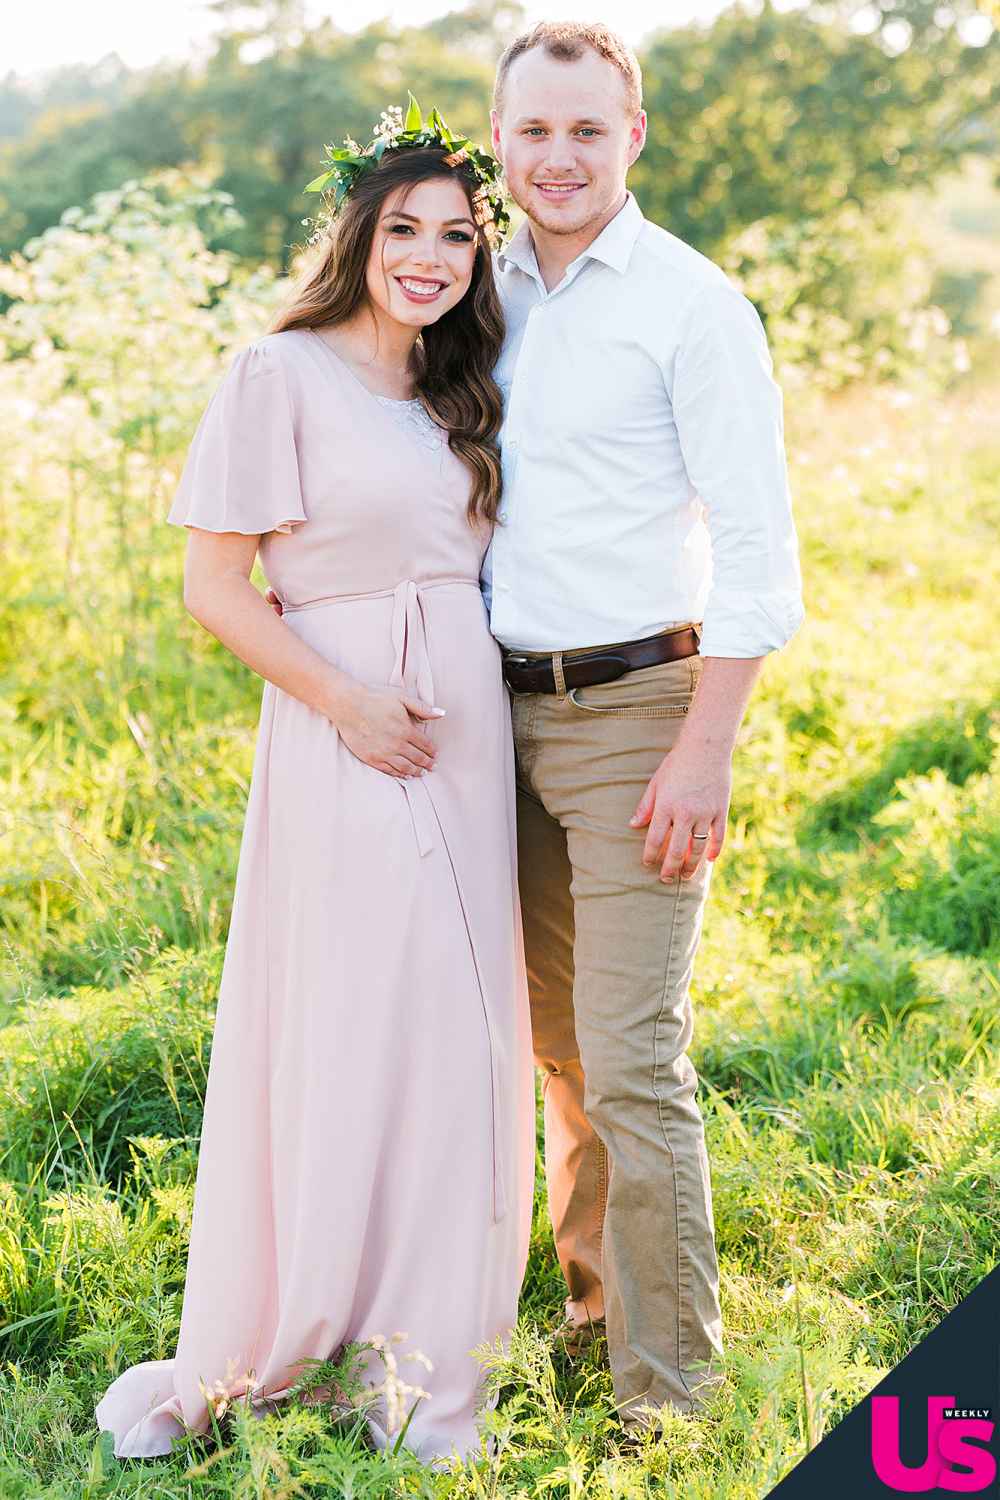 Josiah Duggar and Lauren Swanson Debut Baby Bella